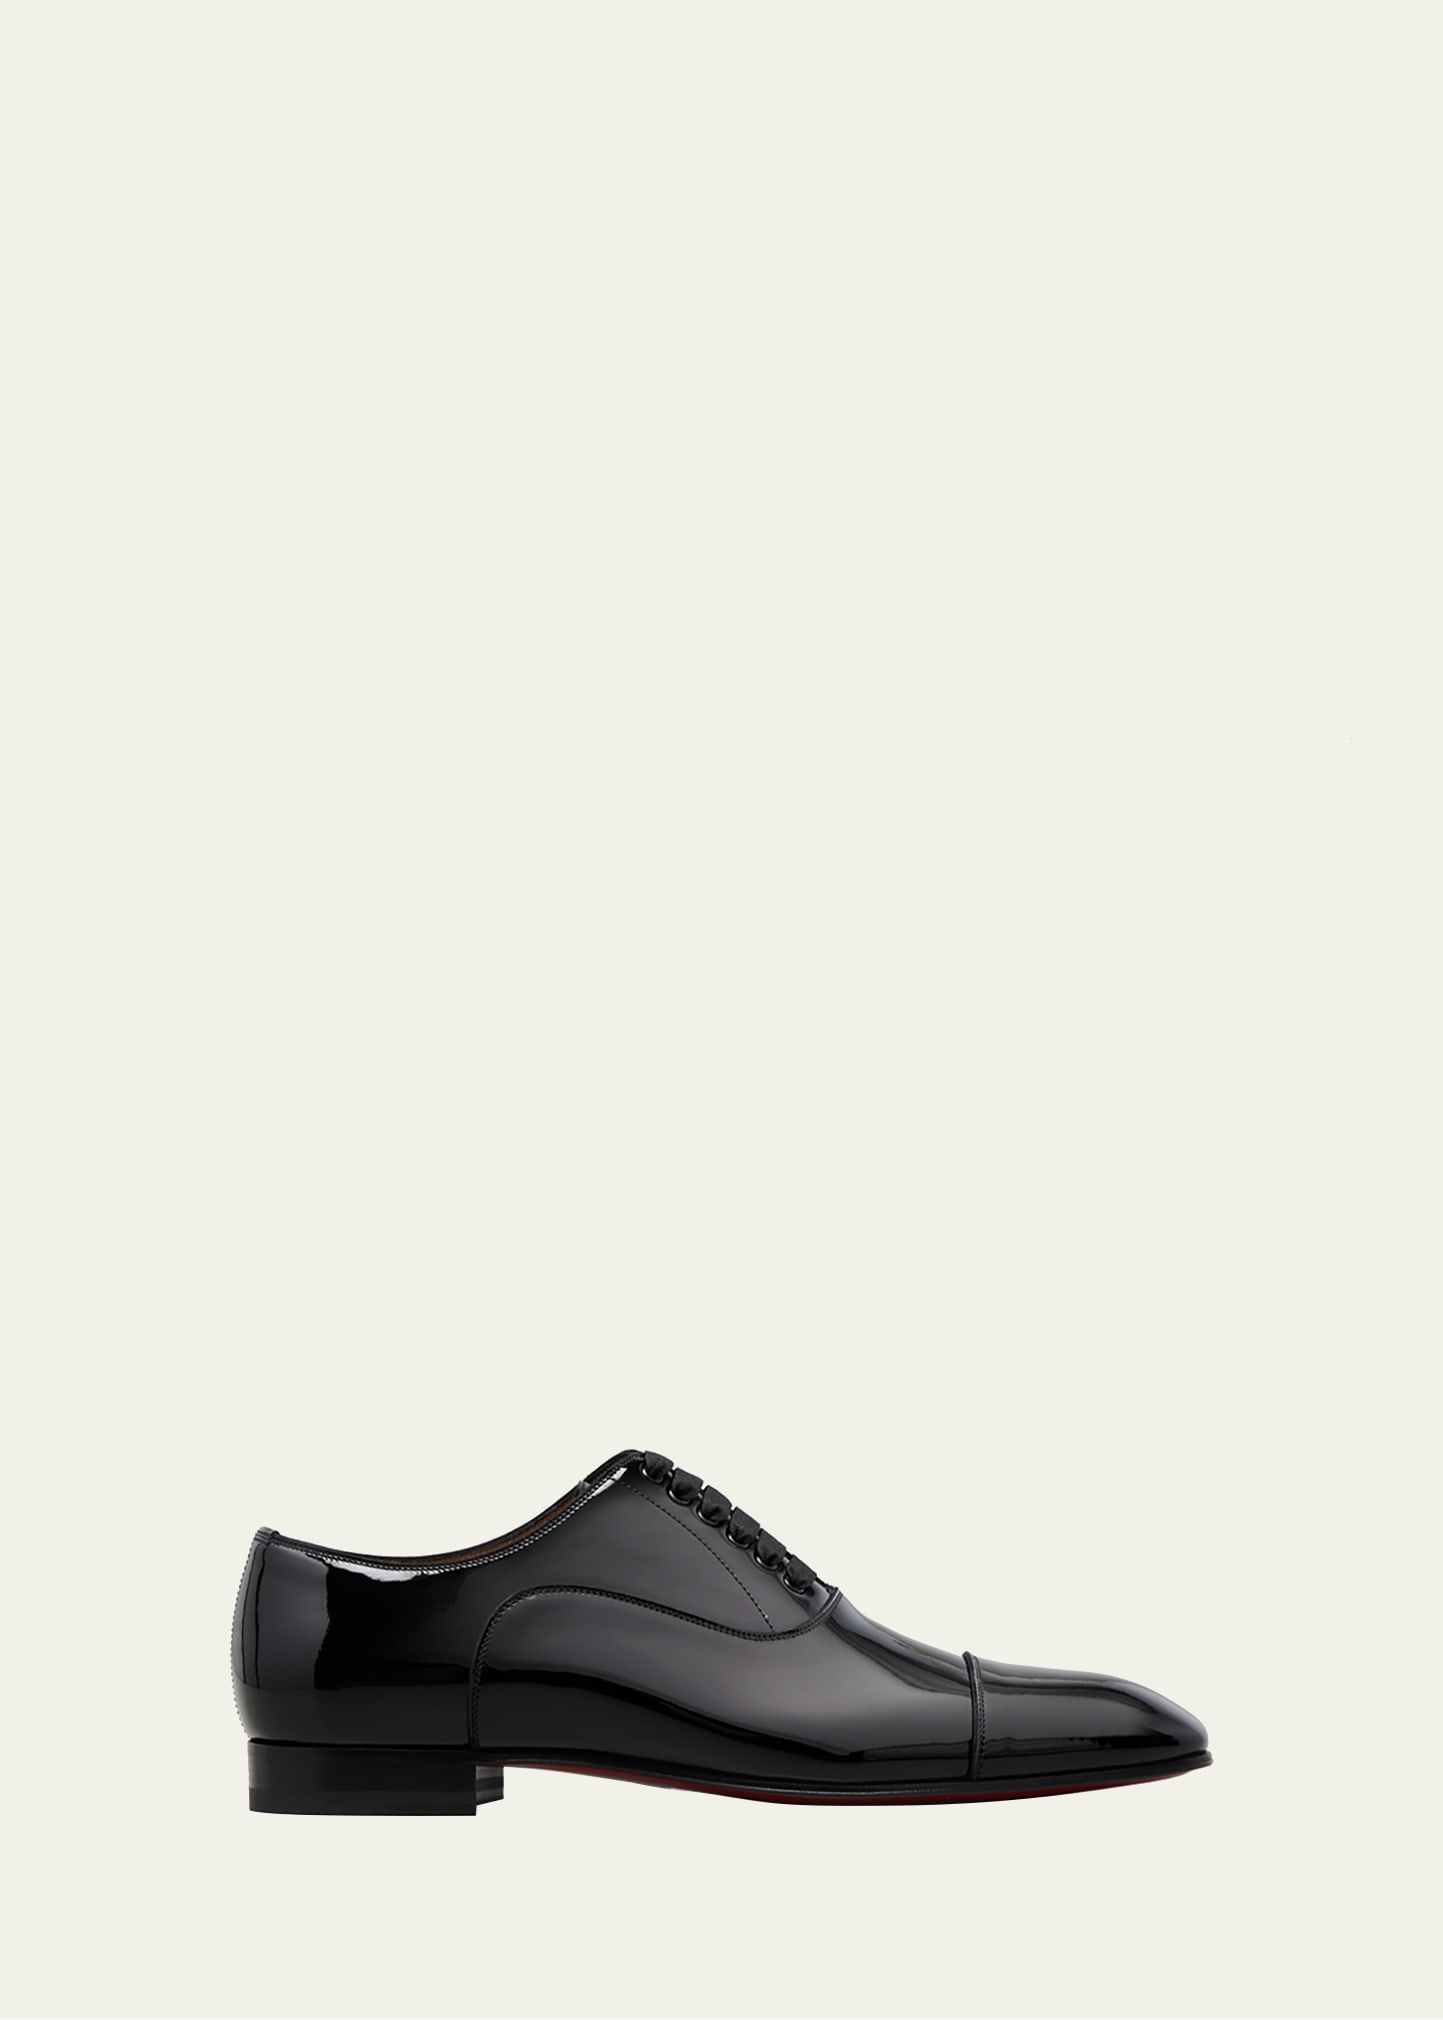 Men's Greggo Patent Leather Oxford Shoes